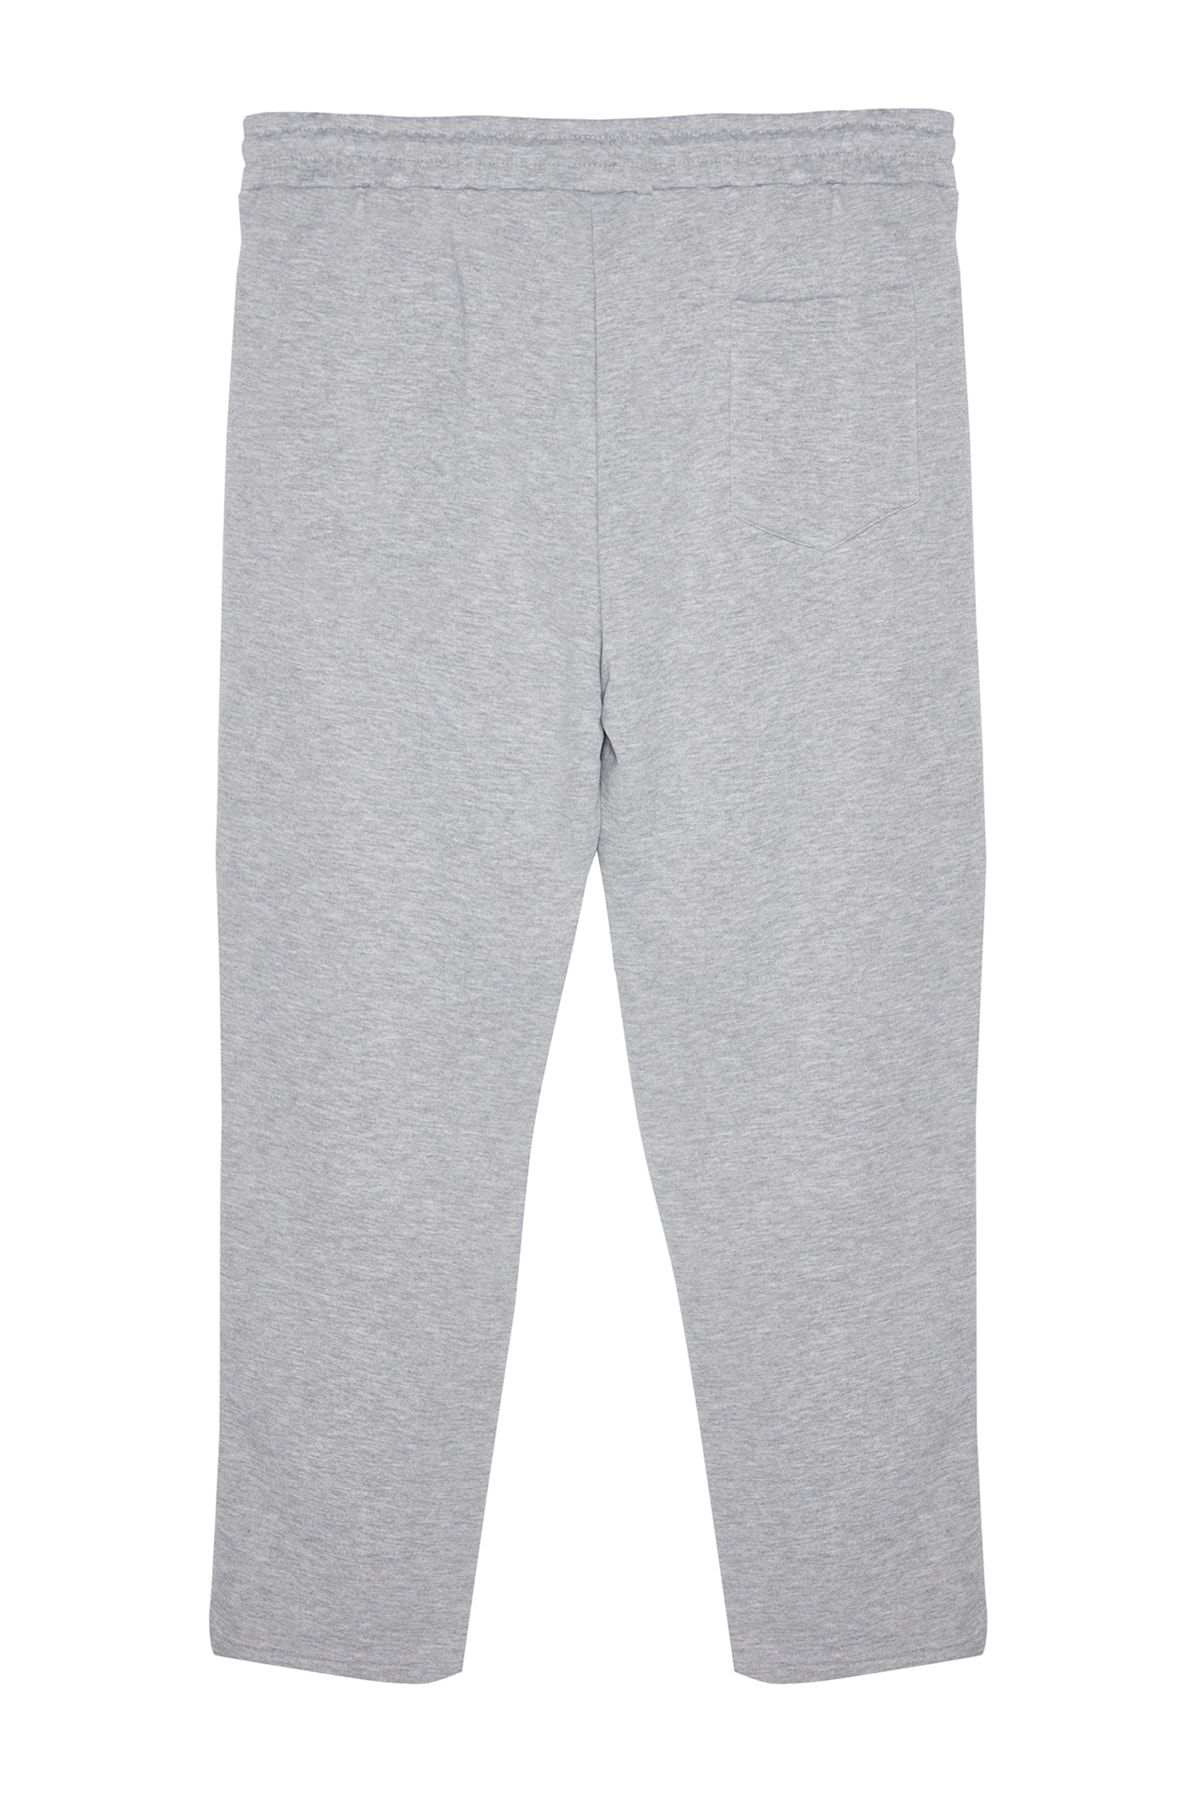 Trendyol Collection Plus Size Sweatpants - Gray - Straight - Trendyol